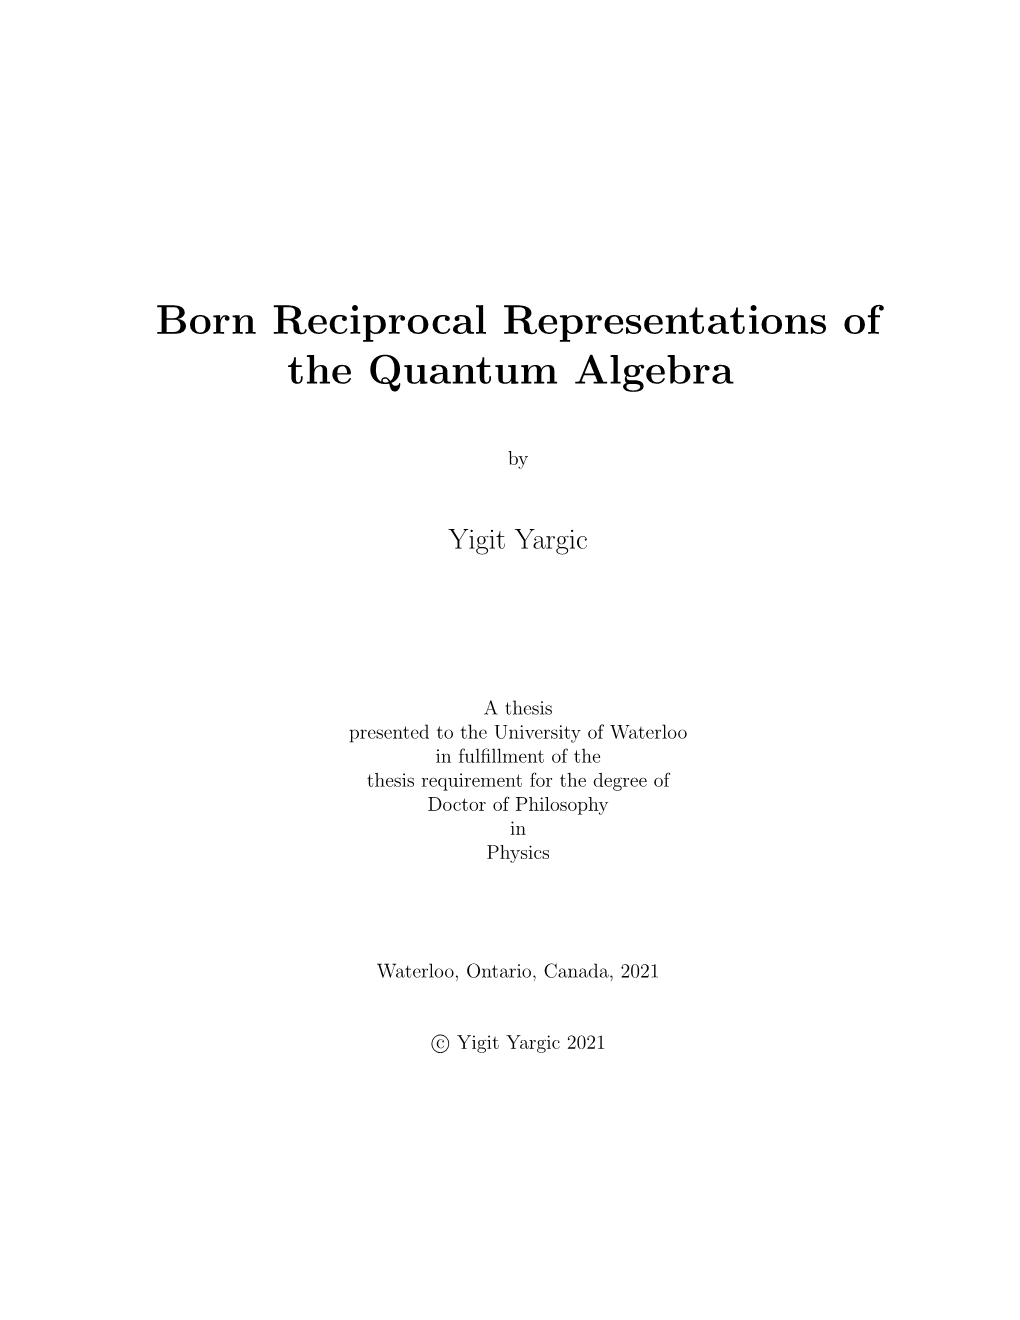 Born Reciprocal Representations of the Quantum Algebra